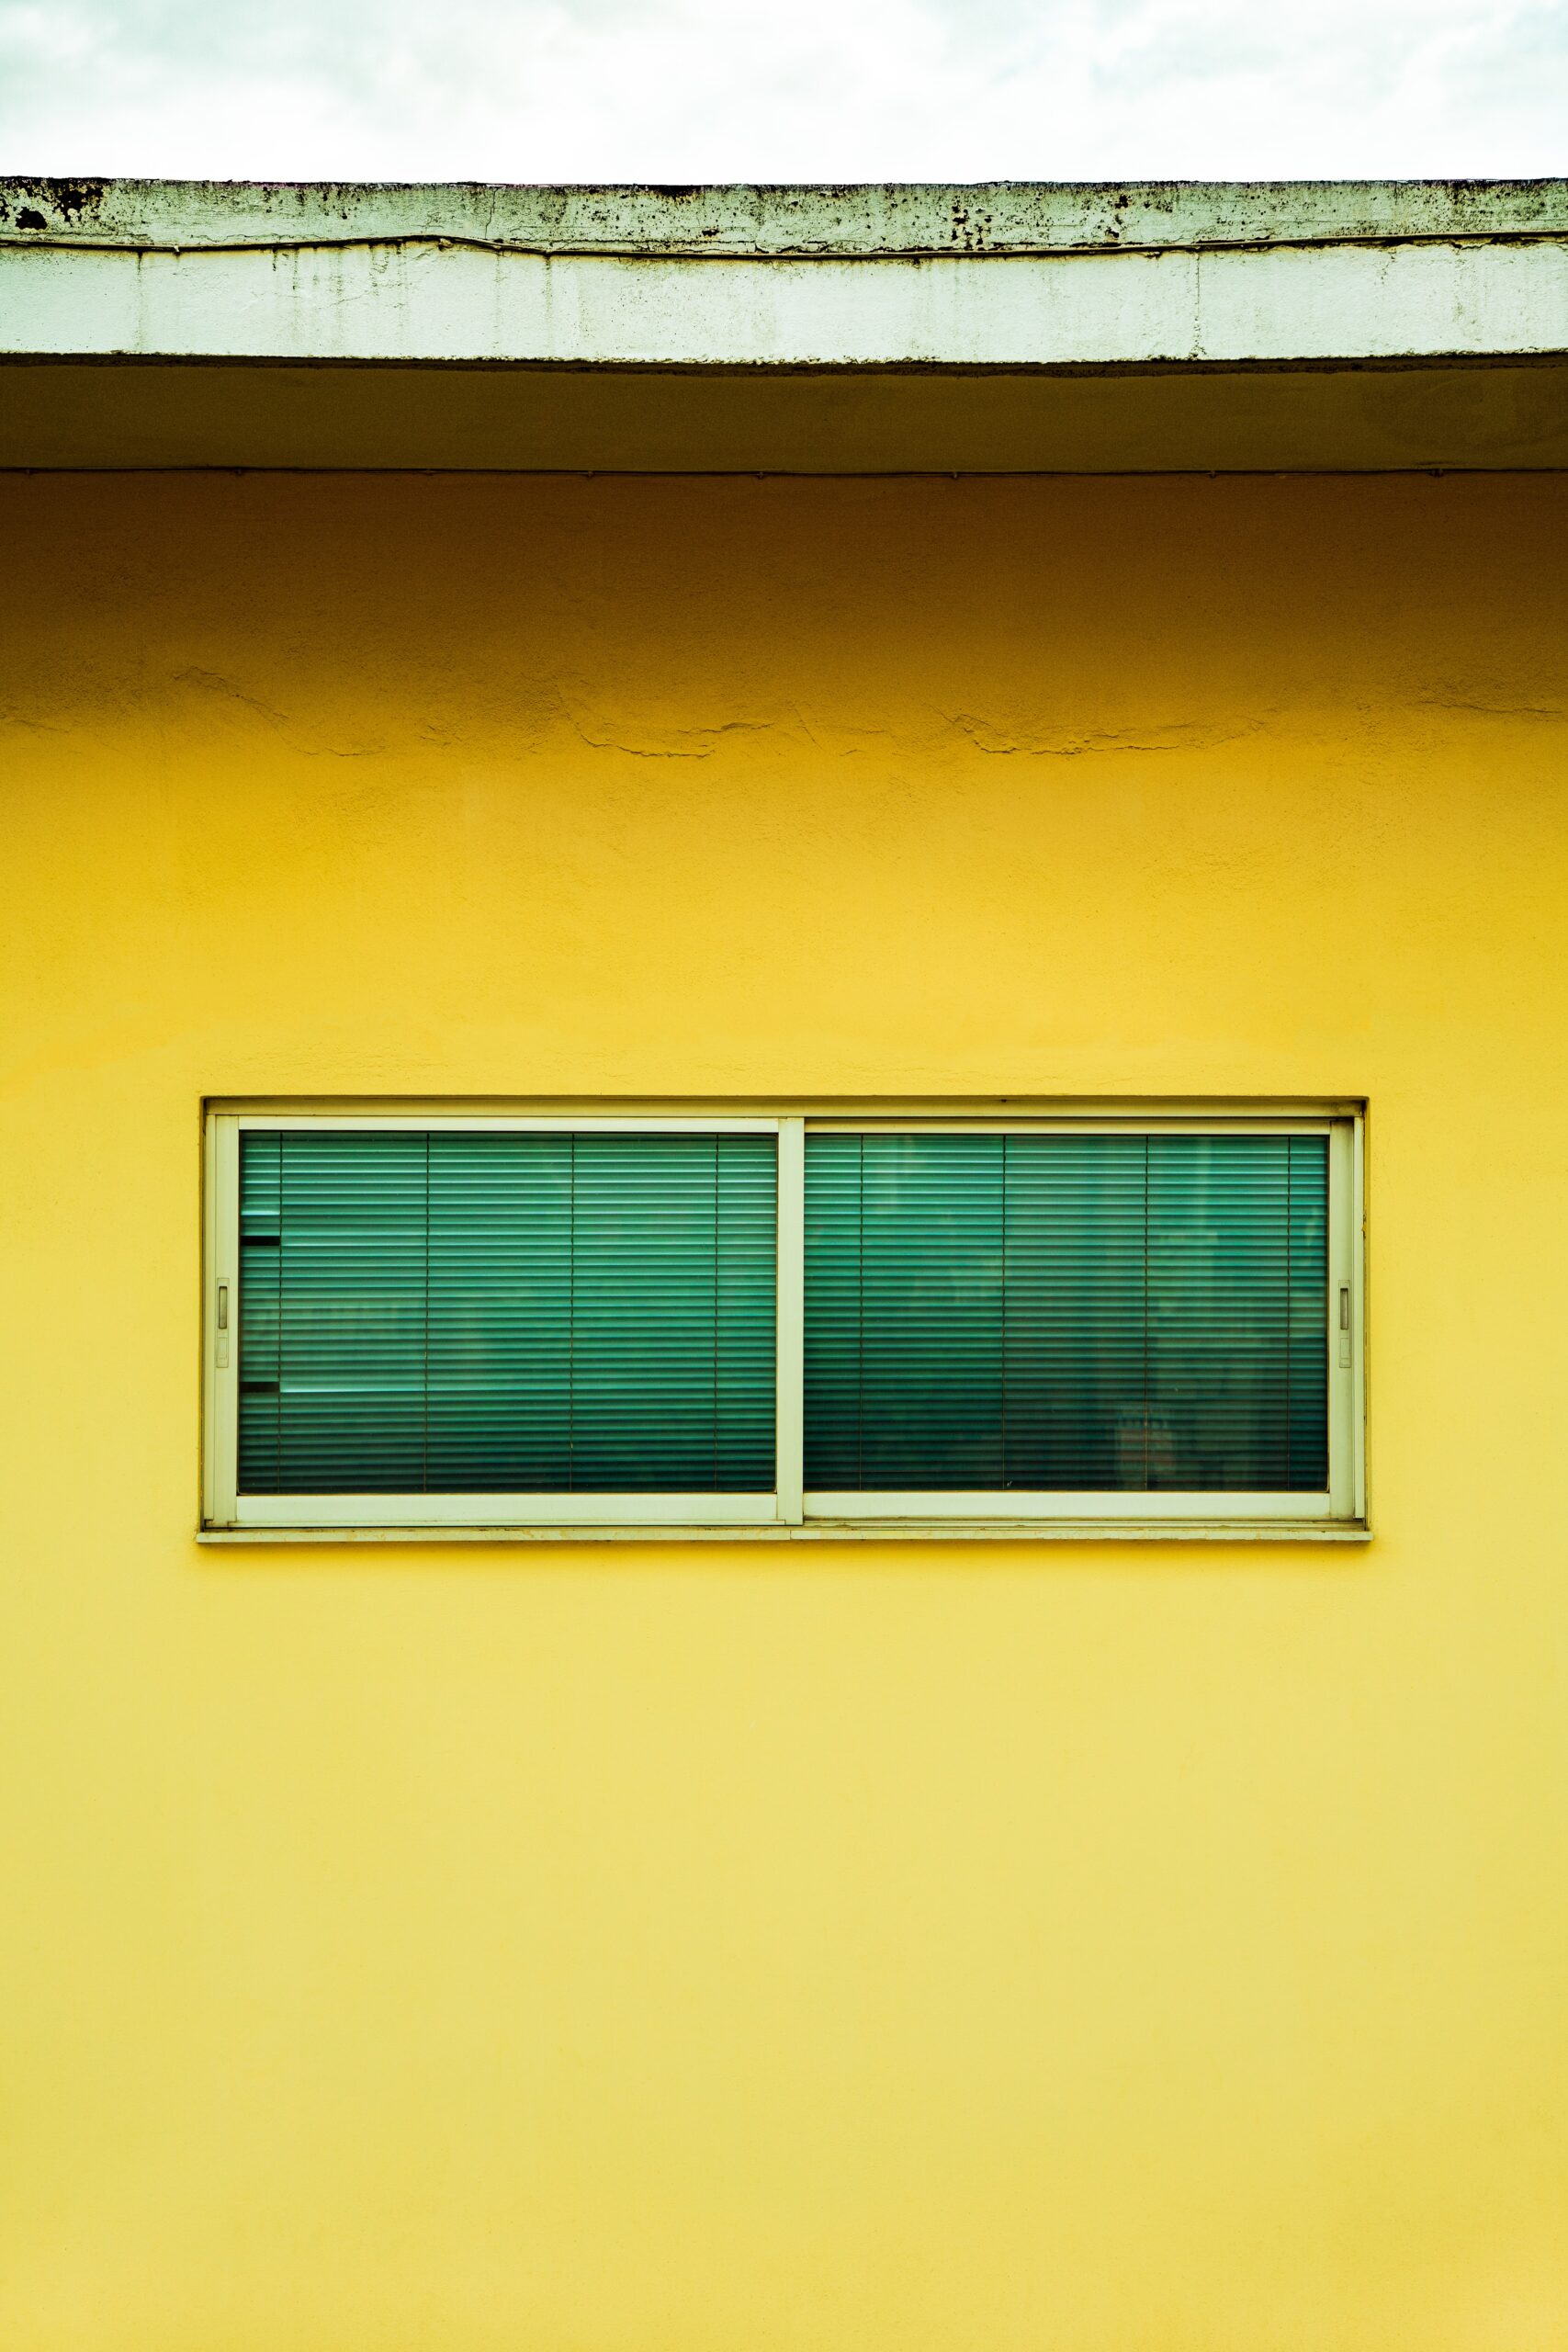 Silicon Designer Examines Smart Home Software Developer Preferences | Case Study 3 | Small Window Yellow Wall